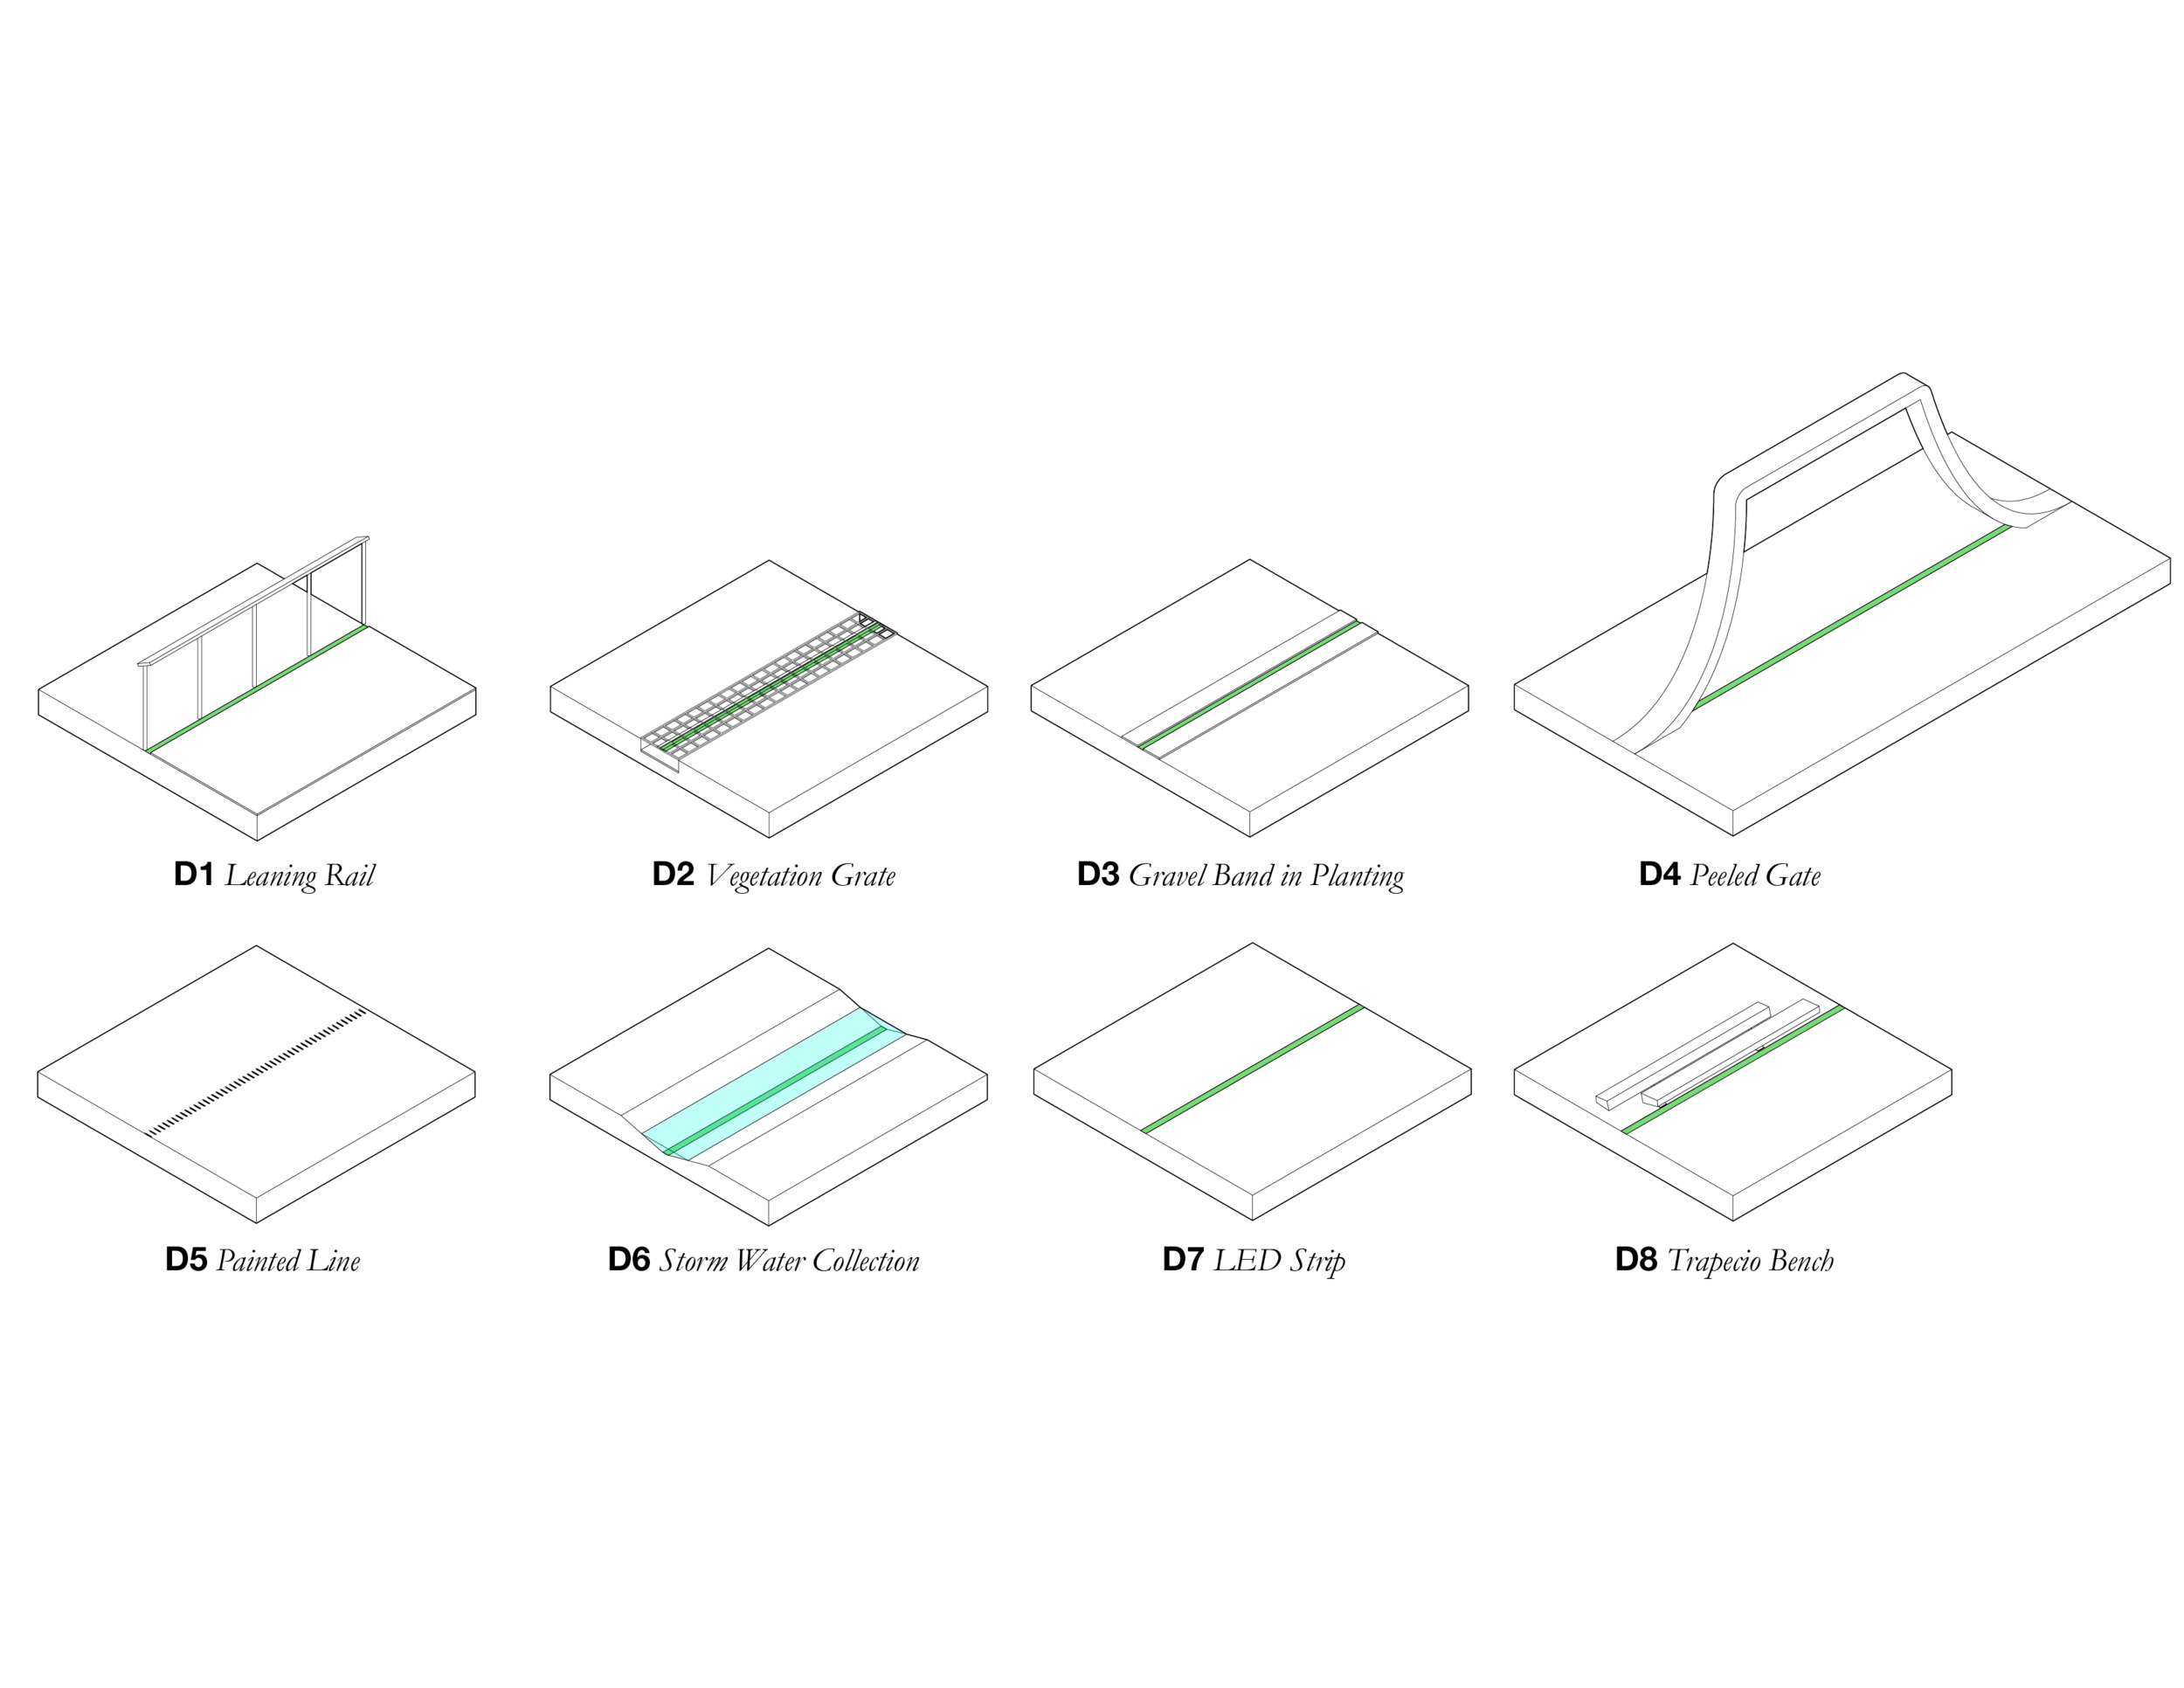 210823_green line diagram linework-01-01.png